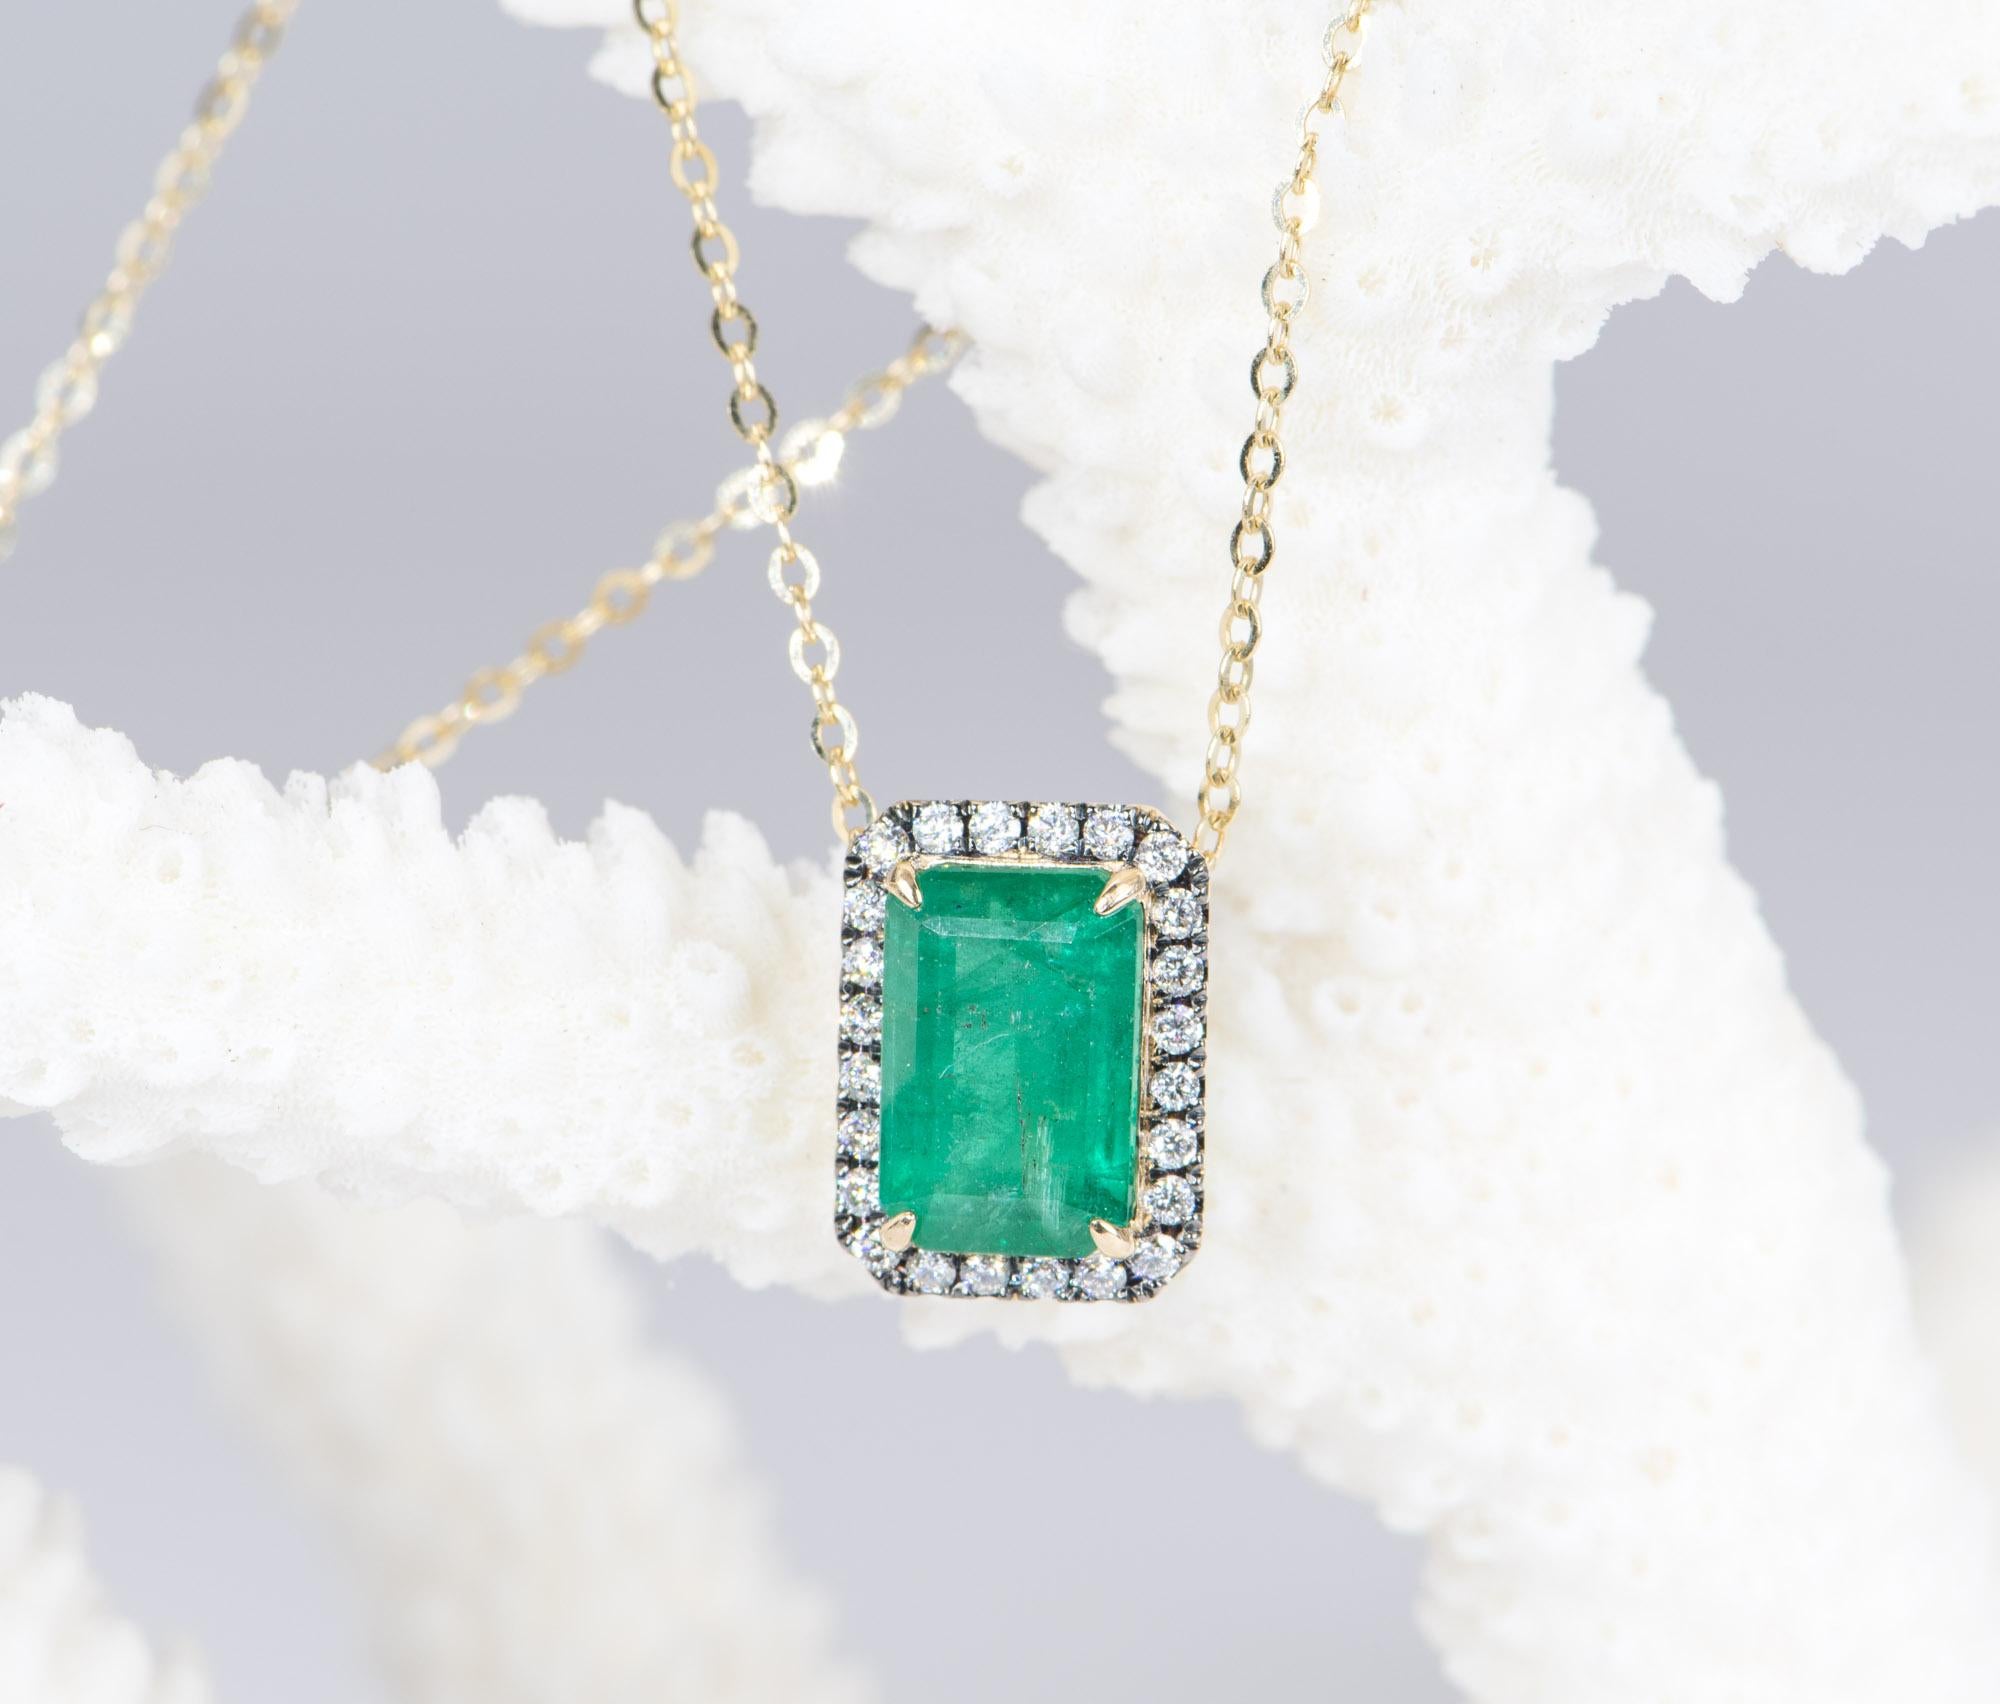 Emerald Cut 2.76ct Zambian Emerald with Diamond Halo 14K Yellow Gold Pendant Necklace Chain 